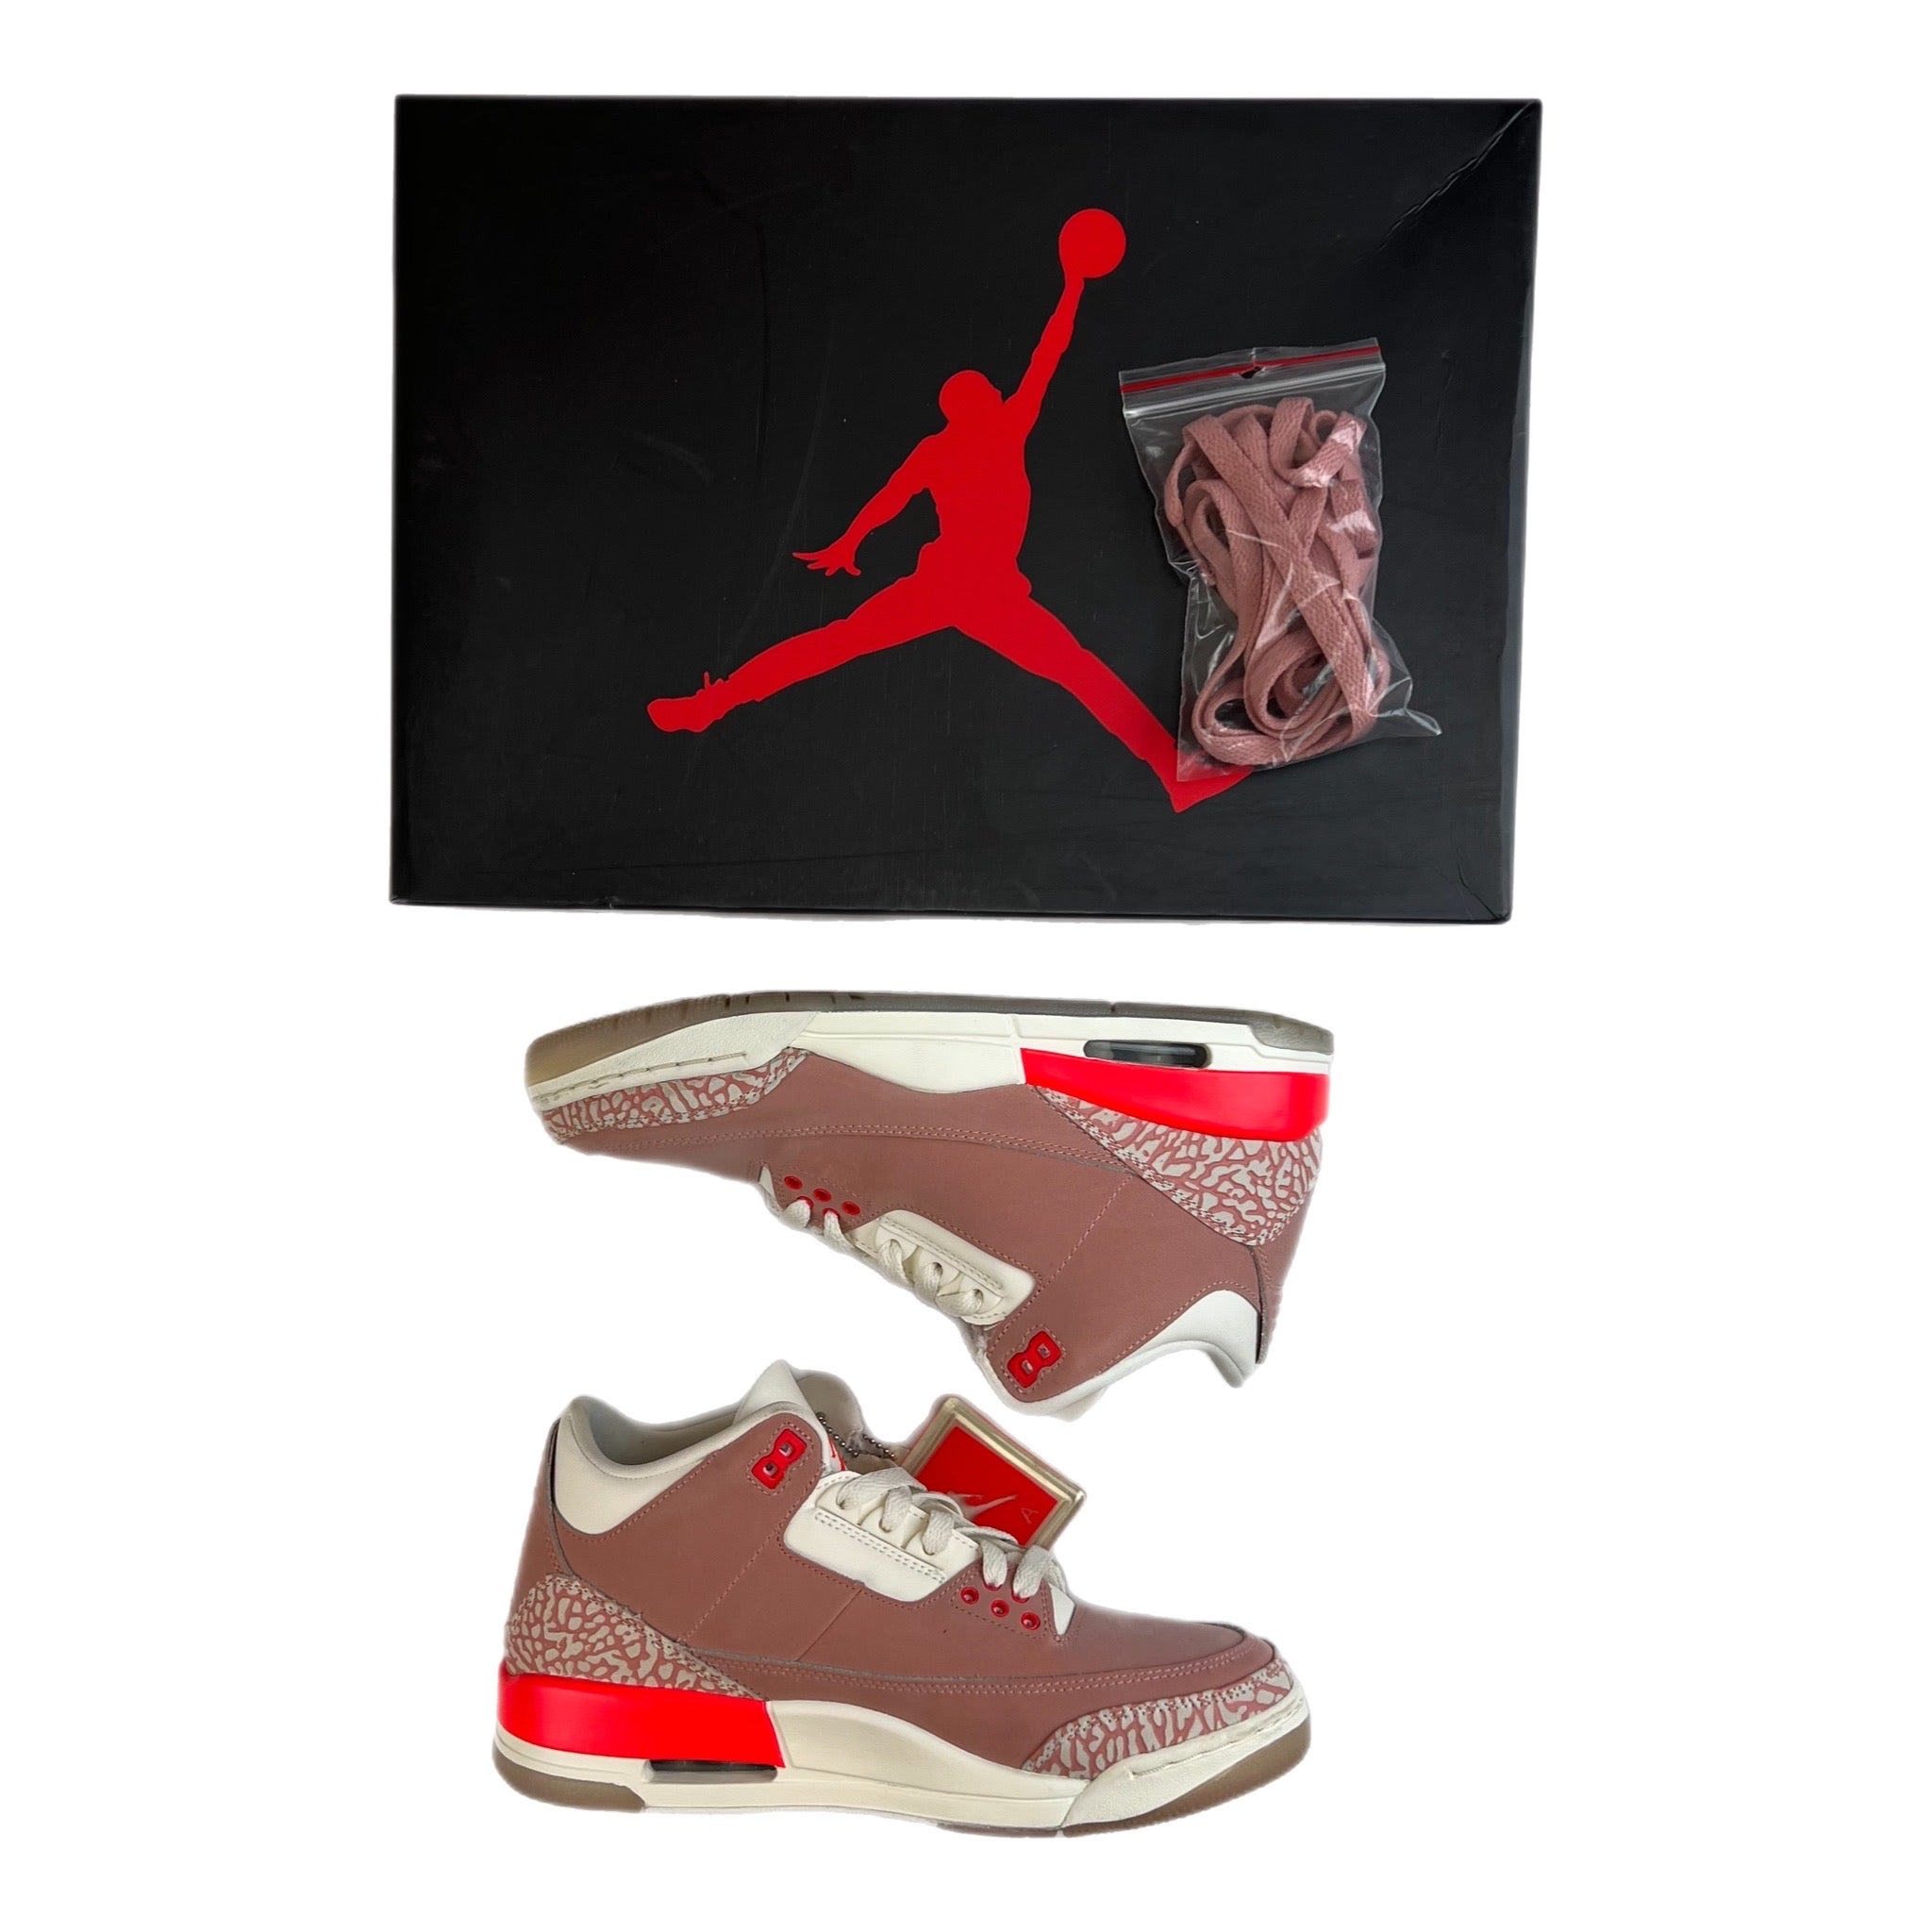 Jordan 3 Rust Pink (Used)